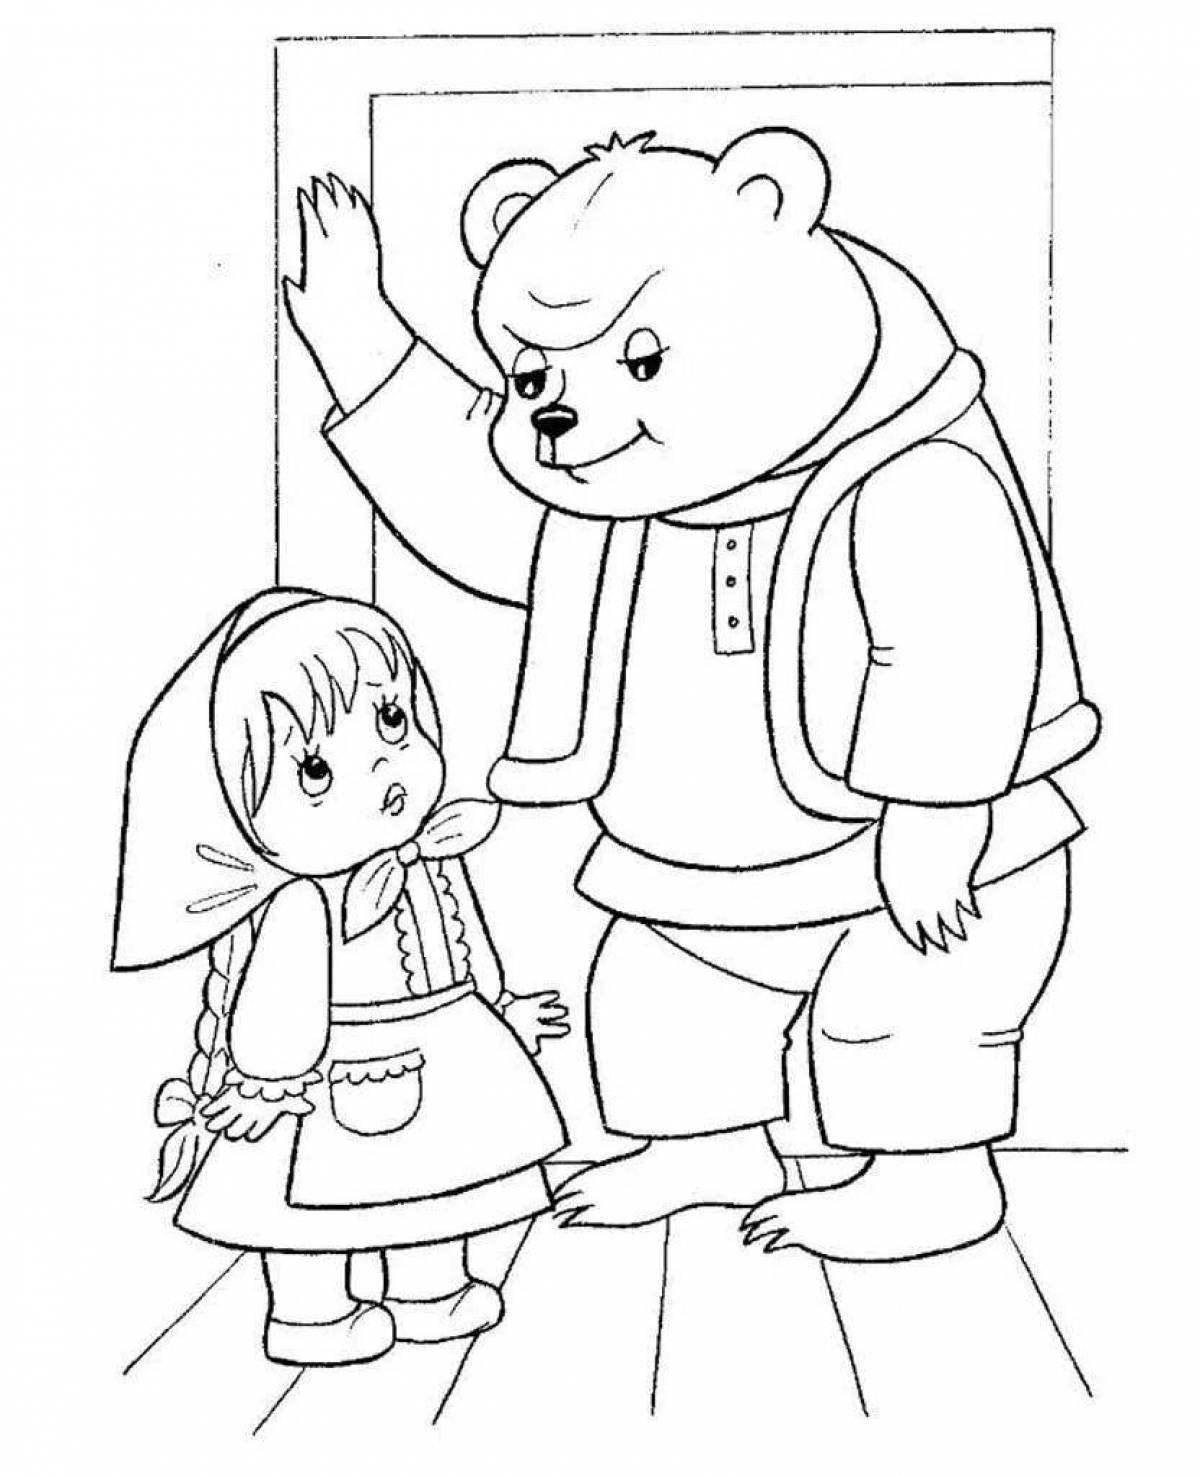 Adorable Masha and the bear coloring book